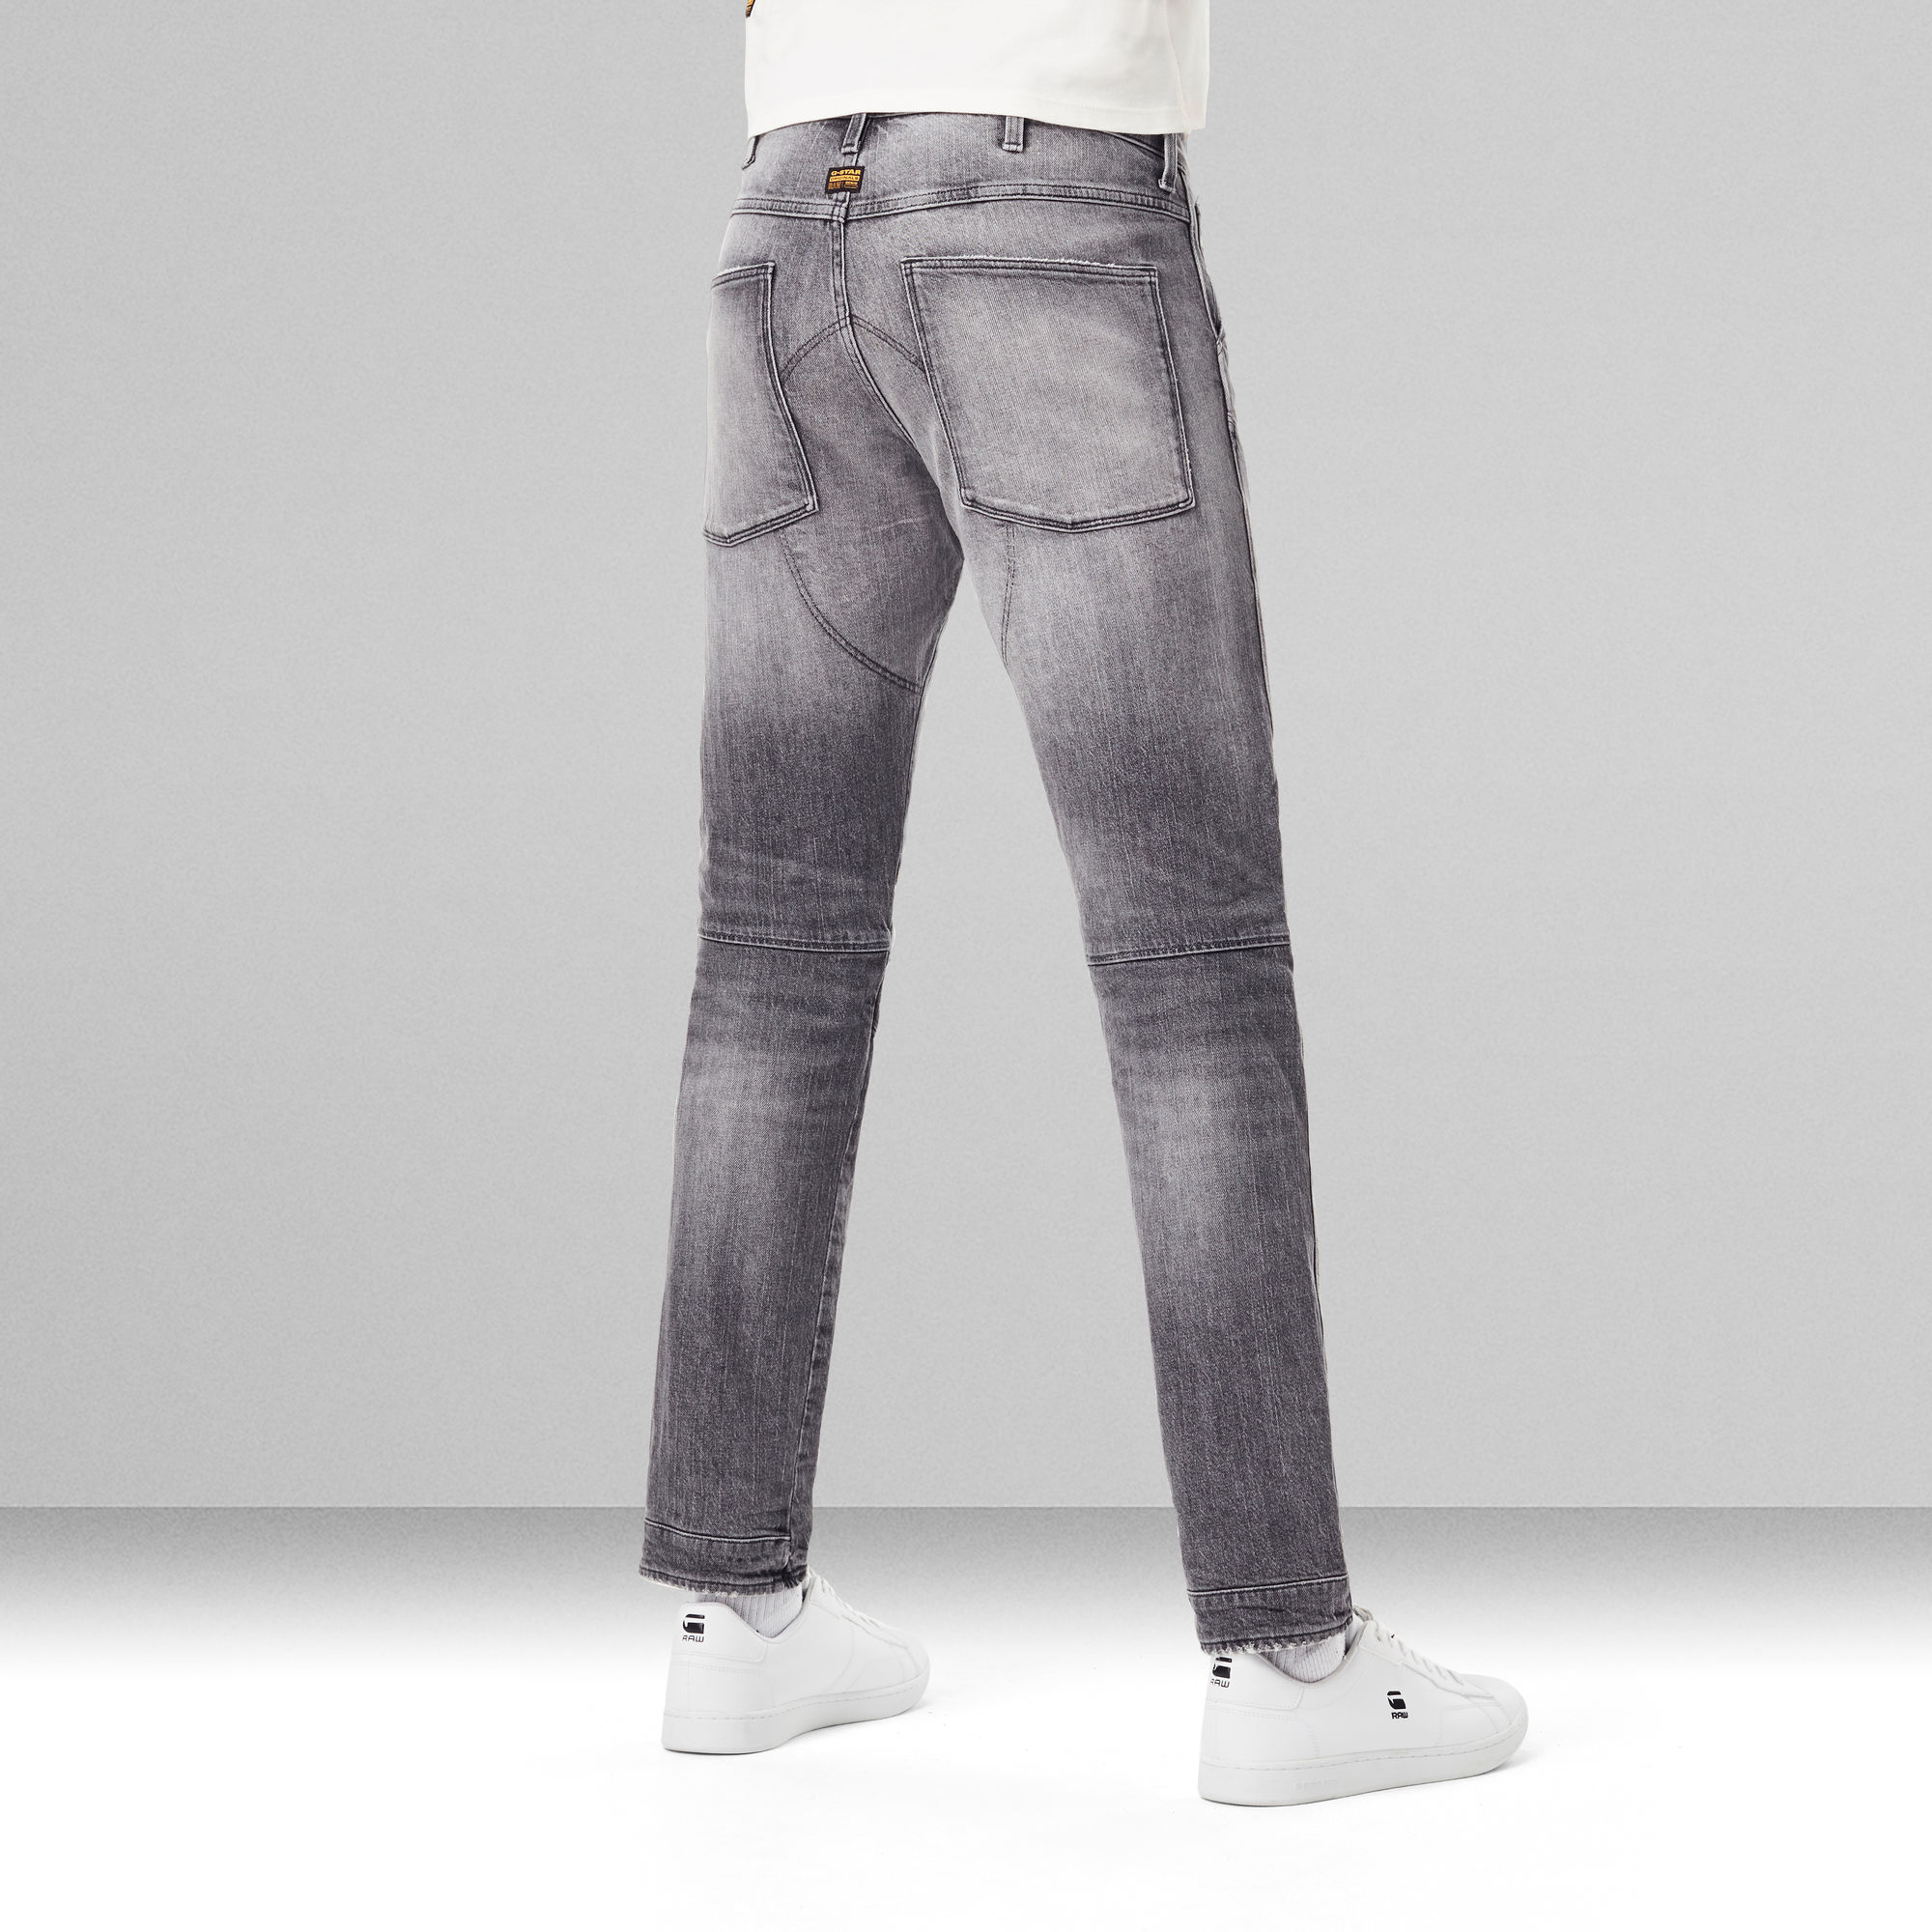 5620 3d Slim Jeans Grey G Star Raw® 